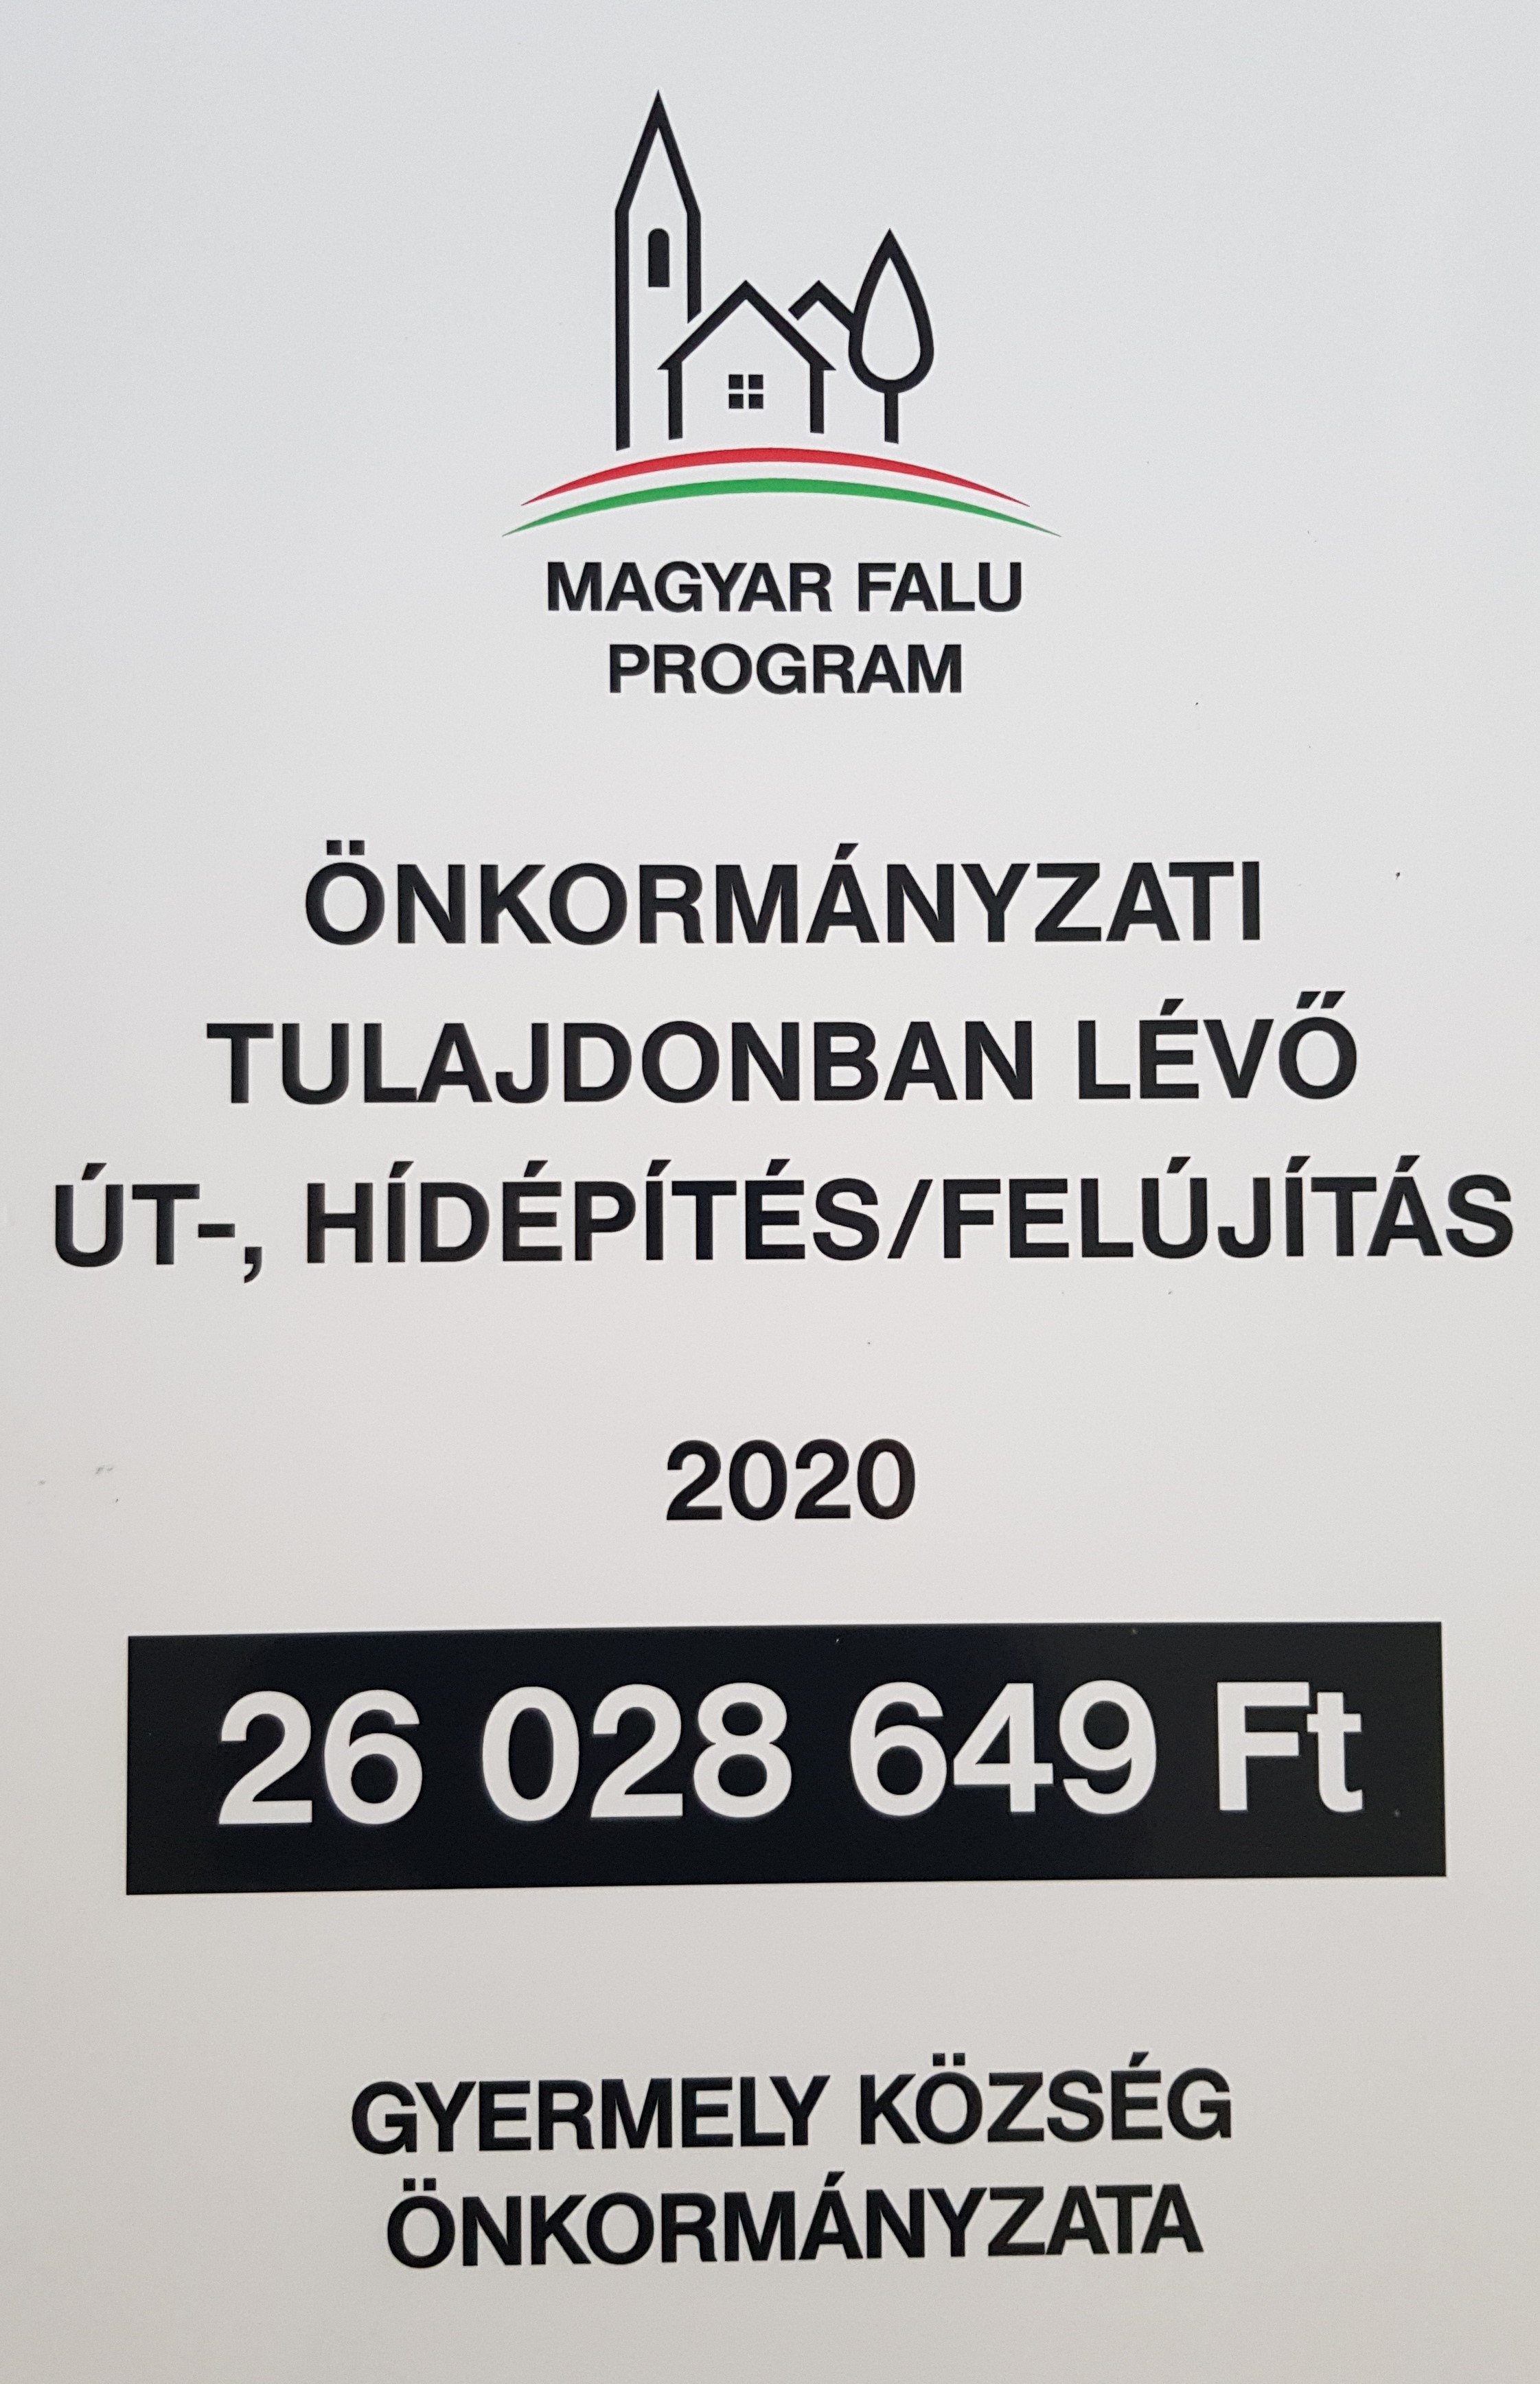 Magyar Falu Program pályázat 2020